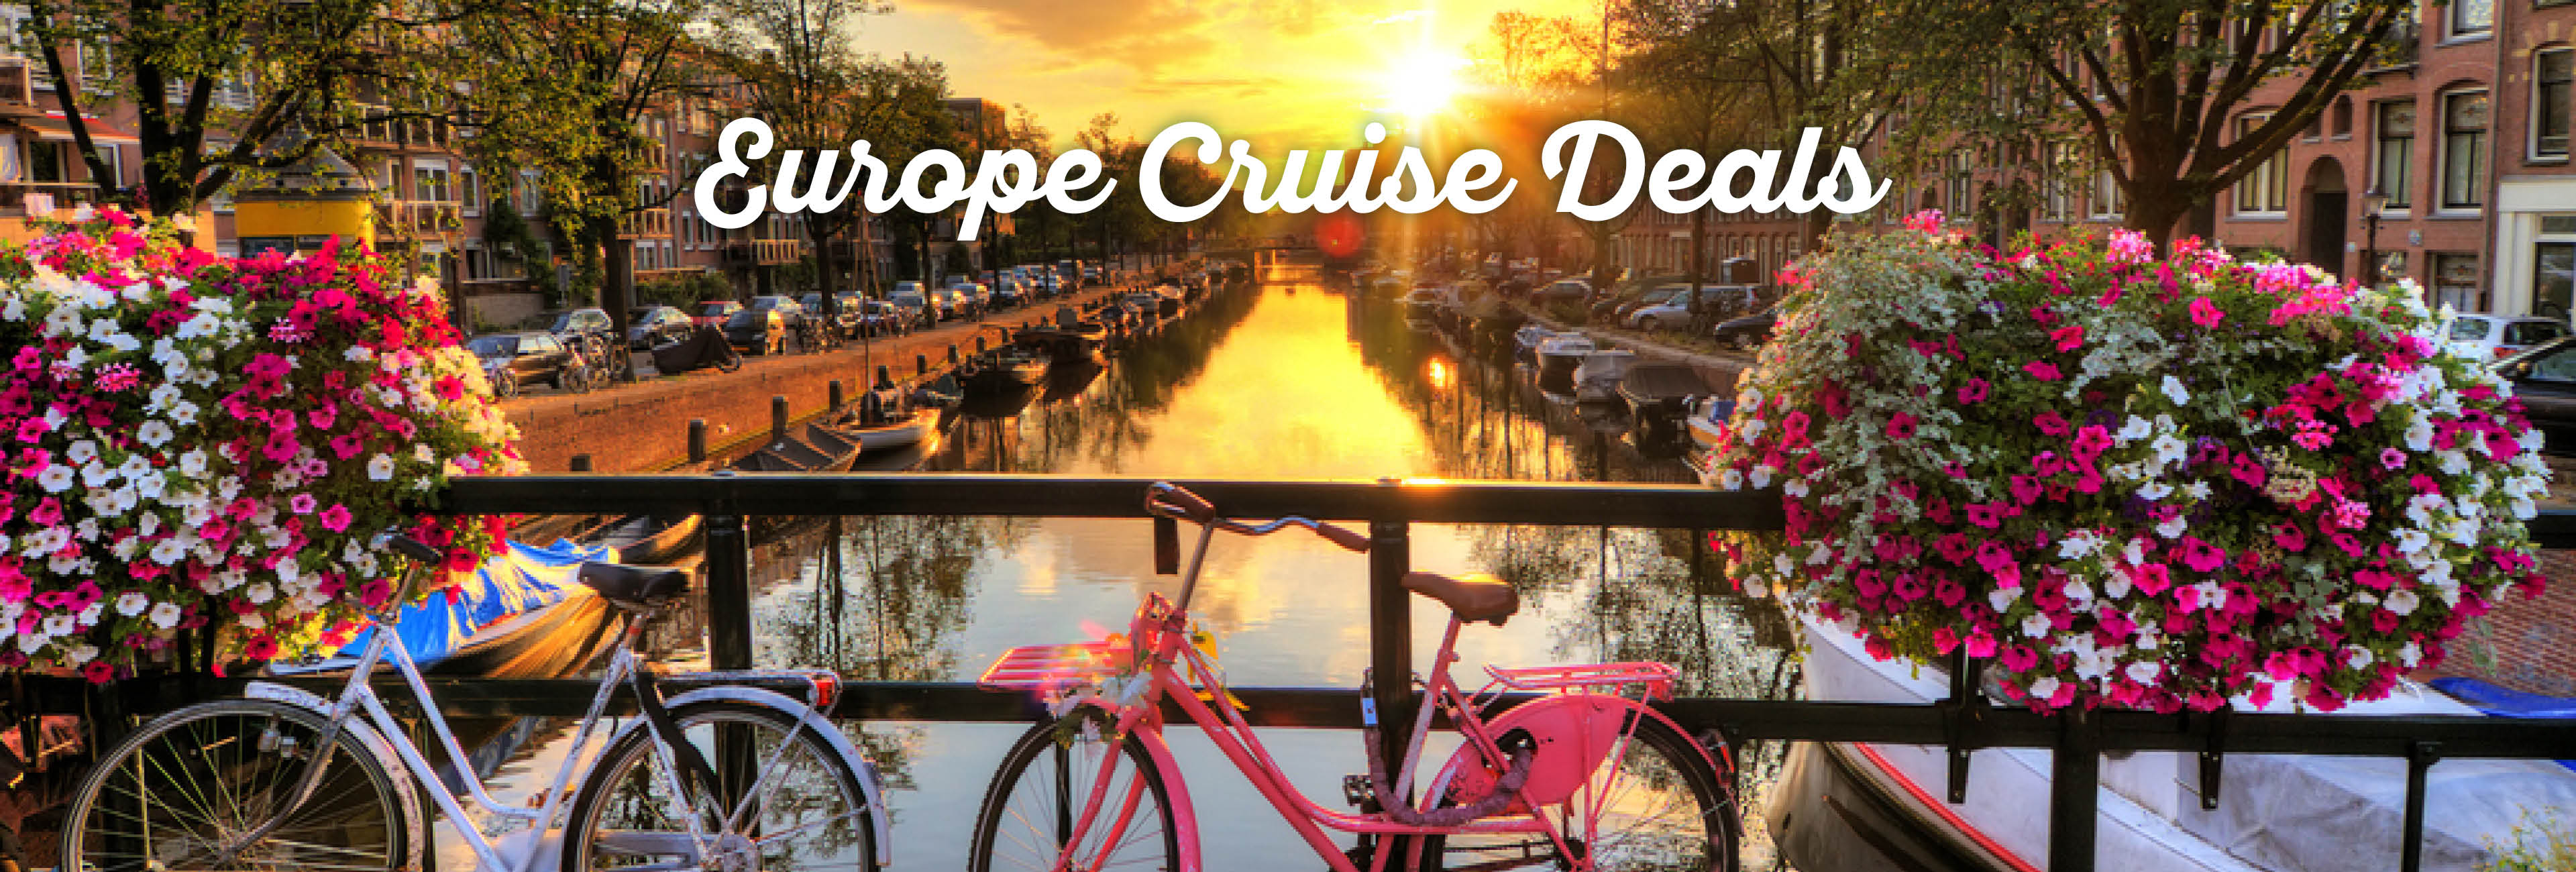 europe-cruise-deals1.jpg